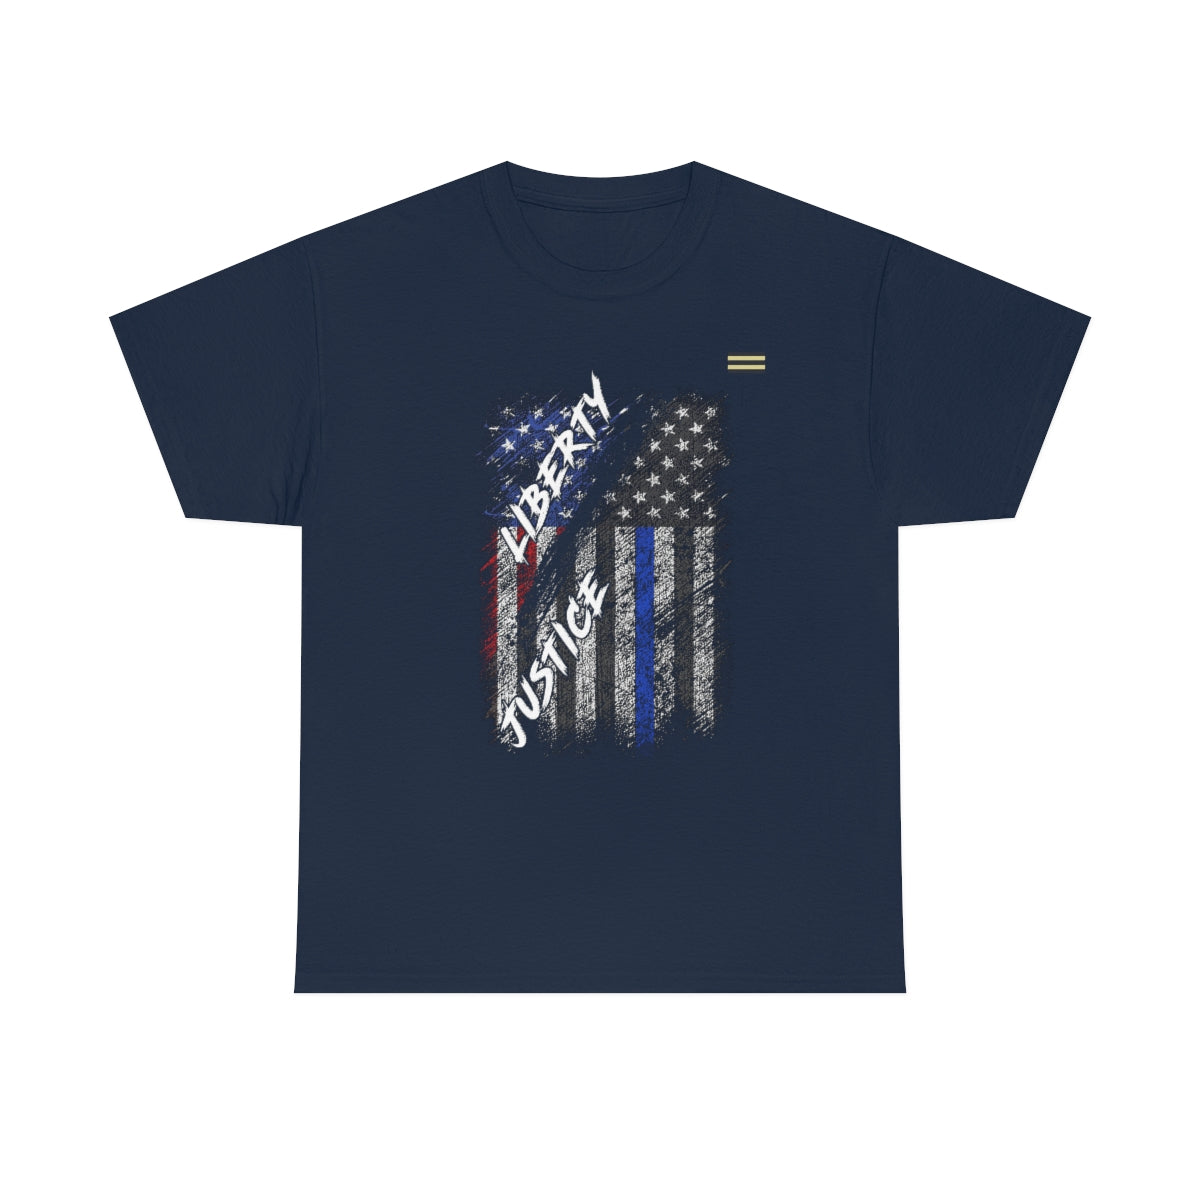 Liberty Justice Law Enforcement T-Shirt